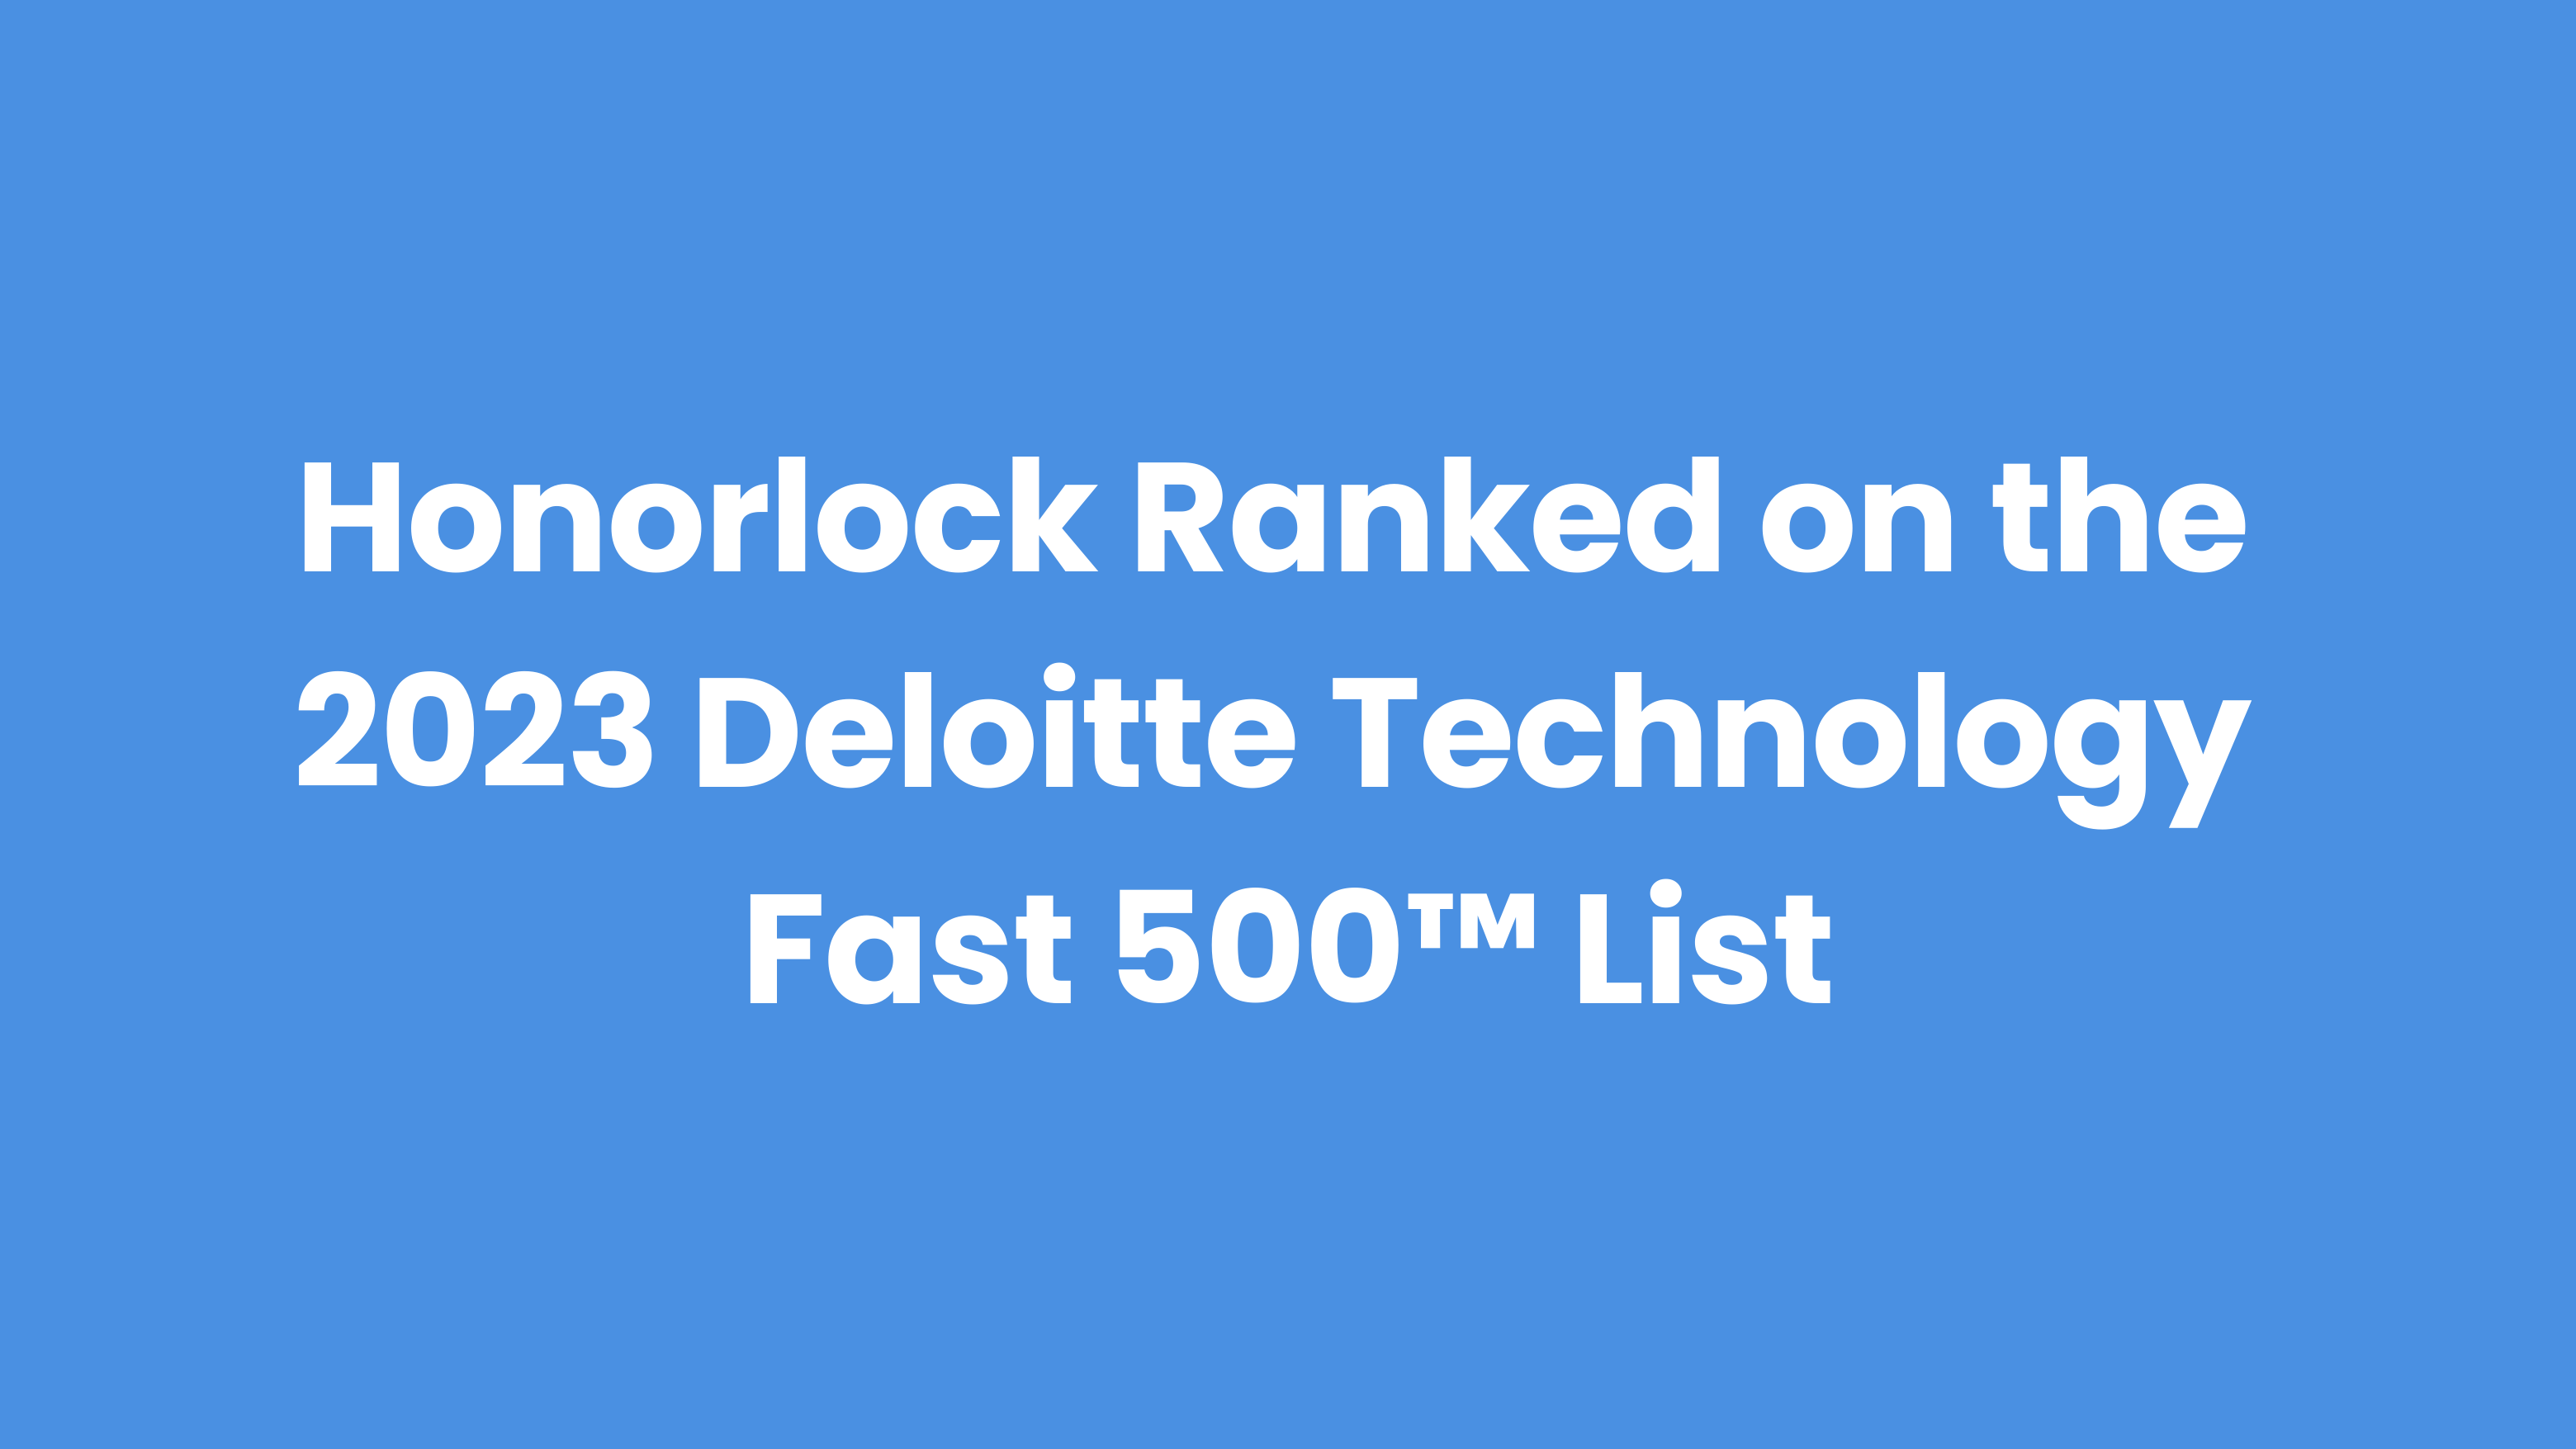 Honorlock remote proctoring ranked on Deloitte Fast 500 List